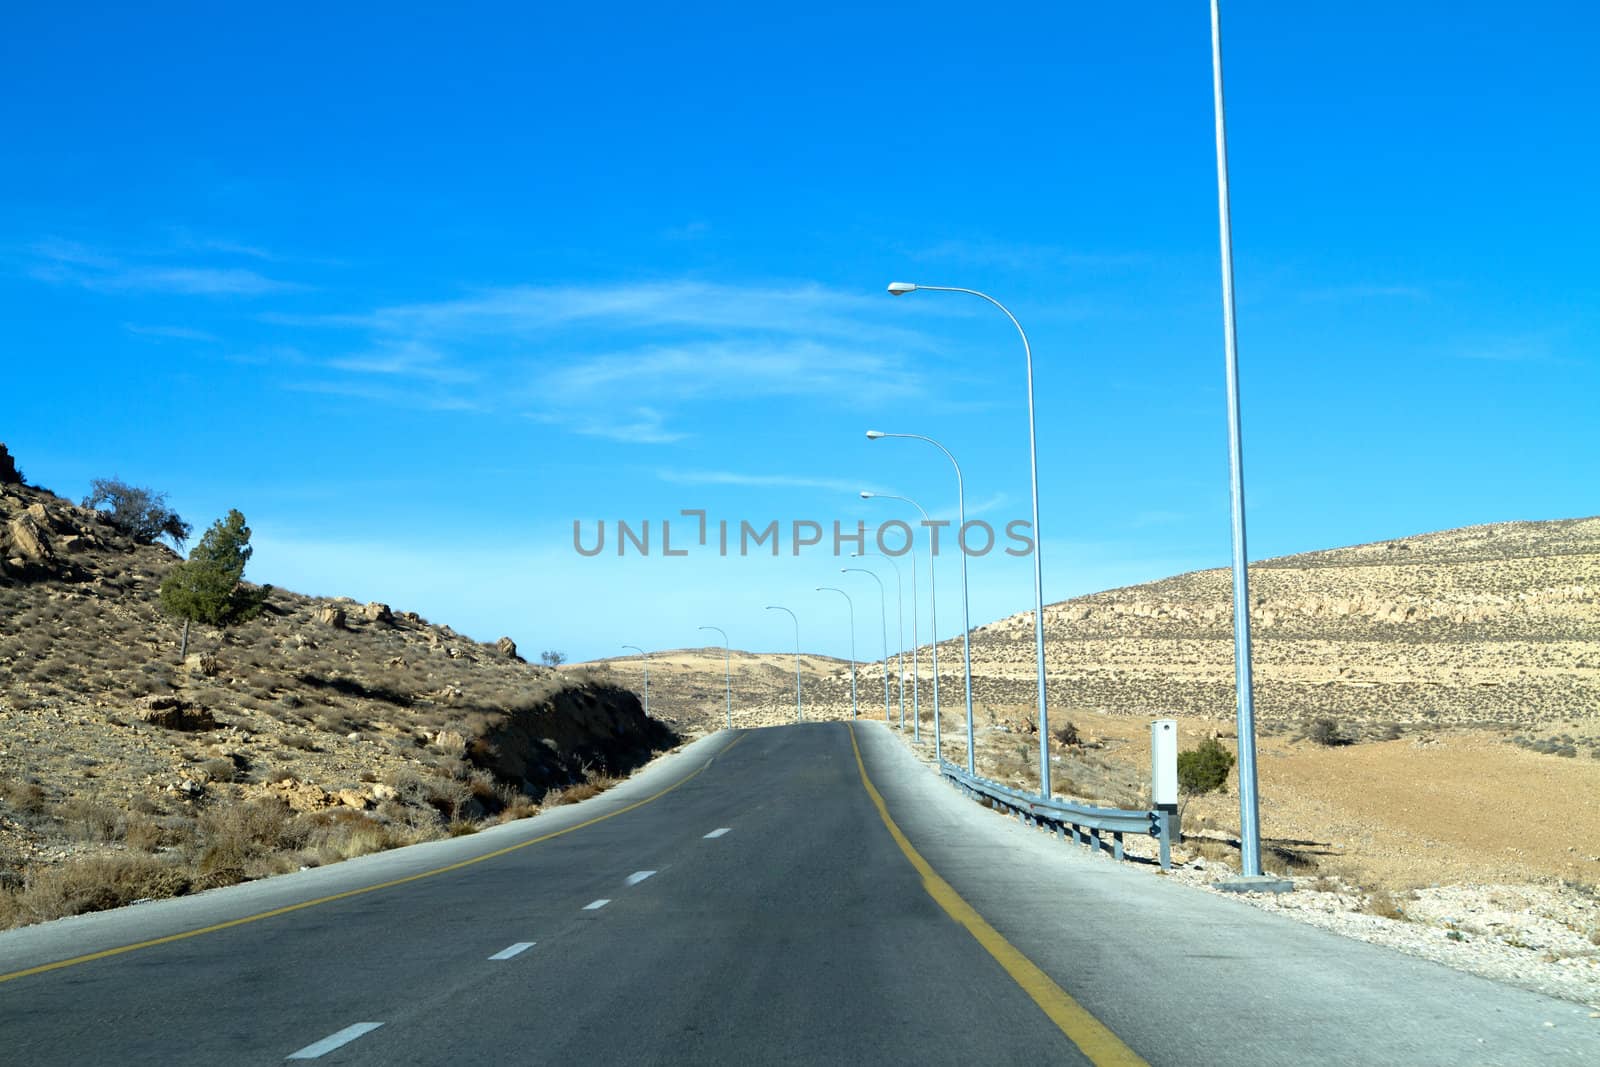 Landscape At Amman,Jordan by thanomphong